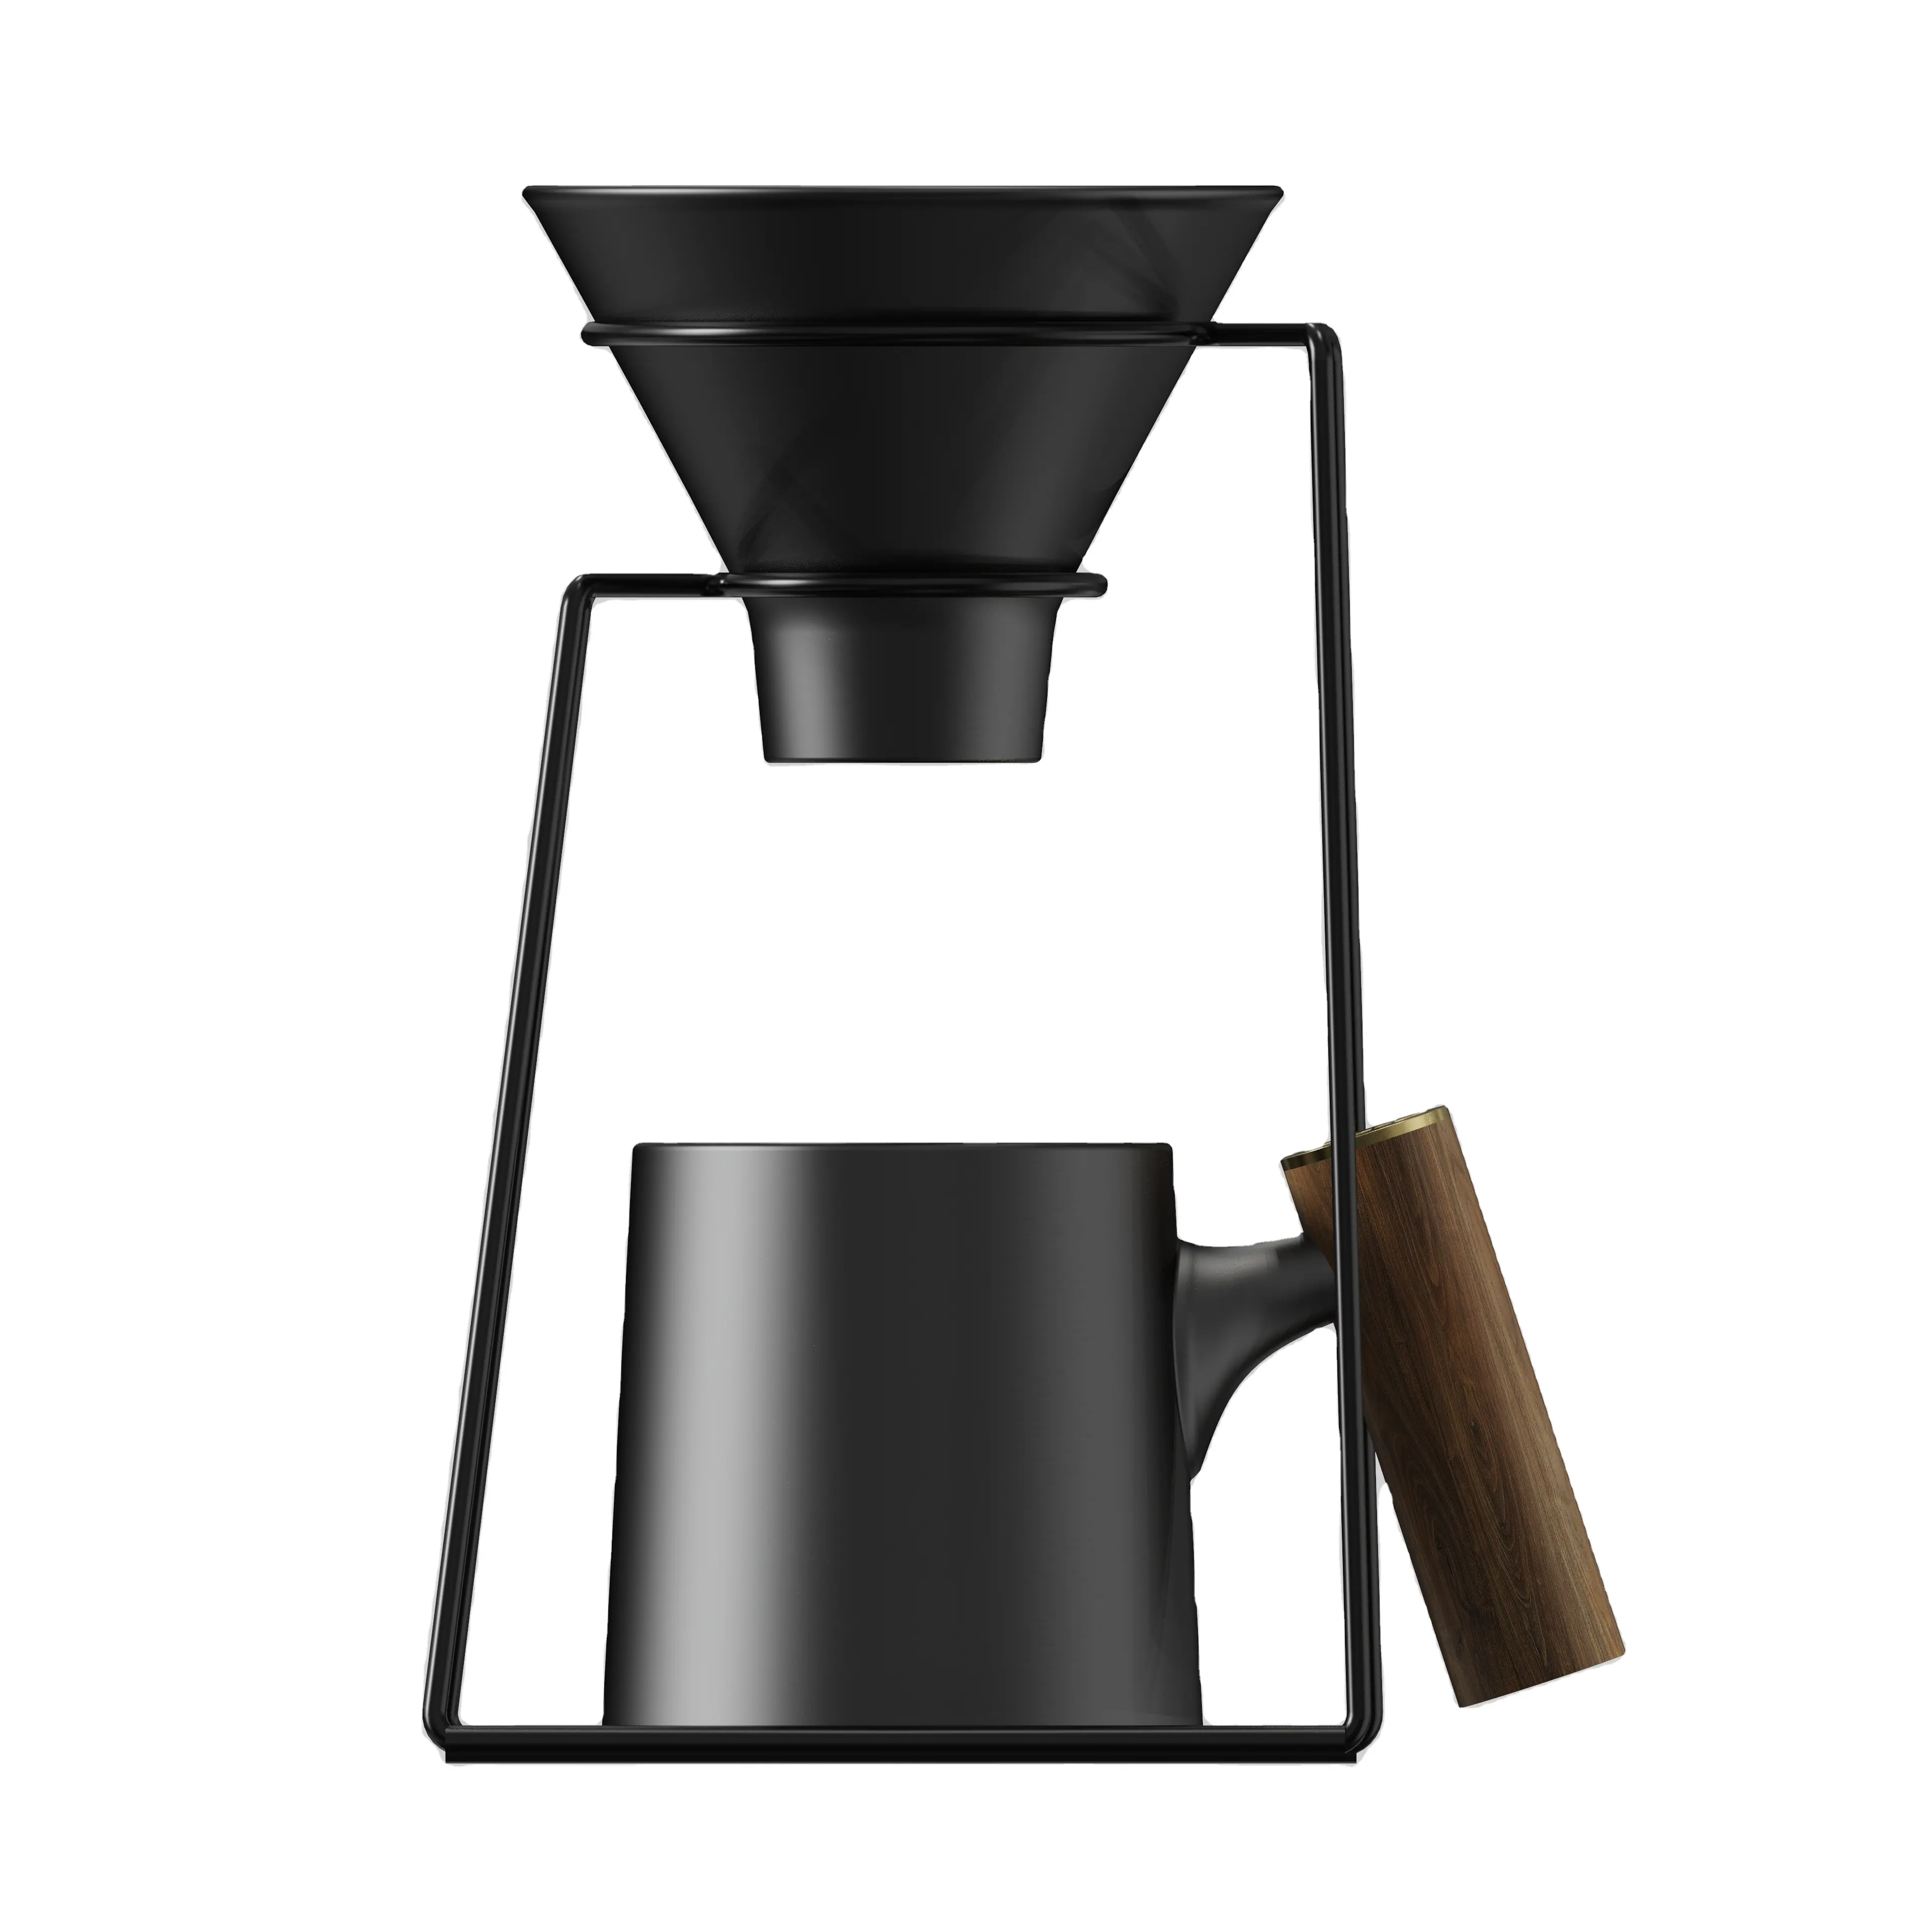 DHPO Set pembuat kopi, unik Mug kopi dan Dripper kopi bingkai besi lipat profesional aliran di atas kopi